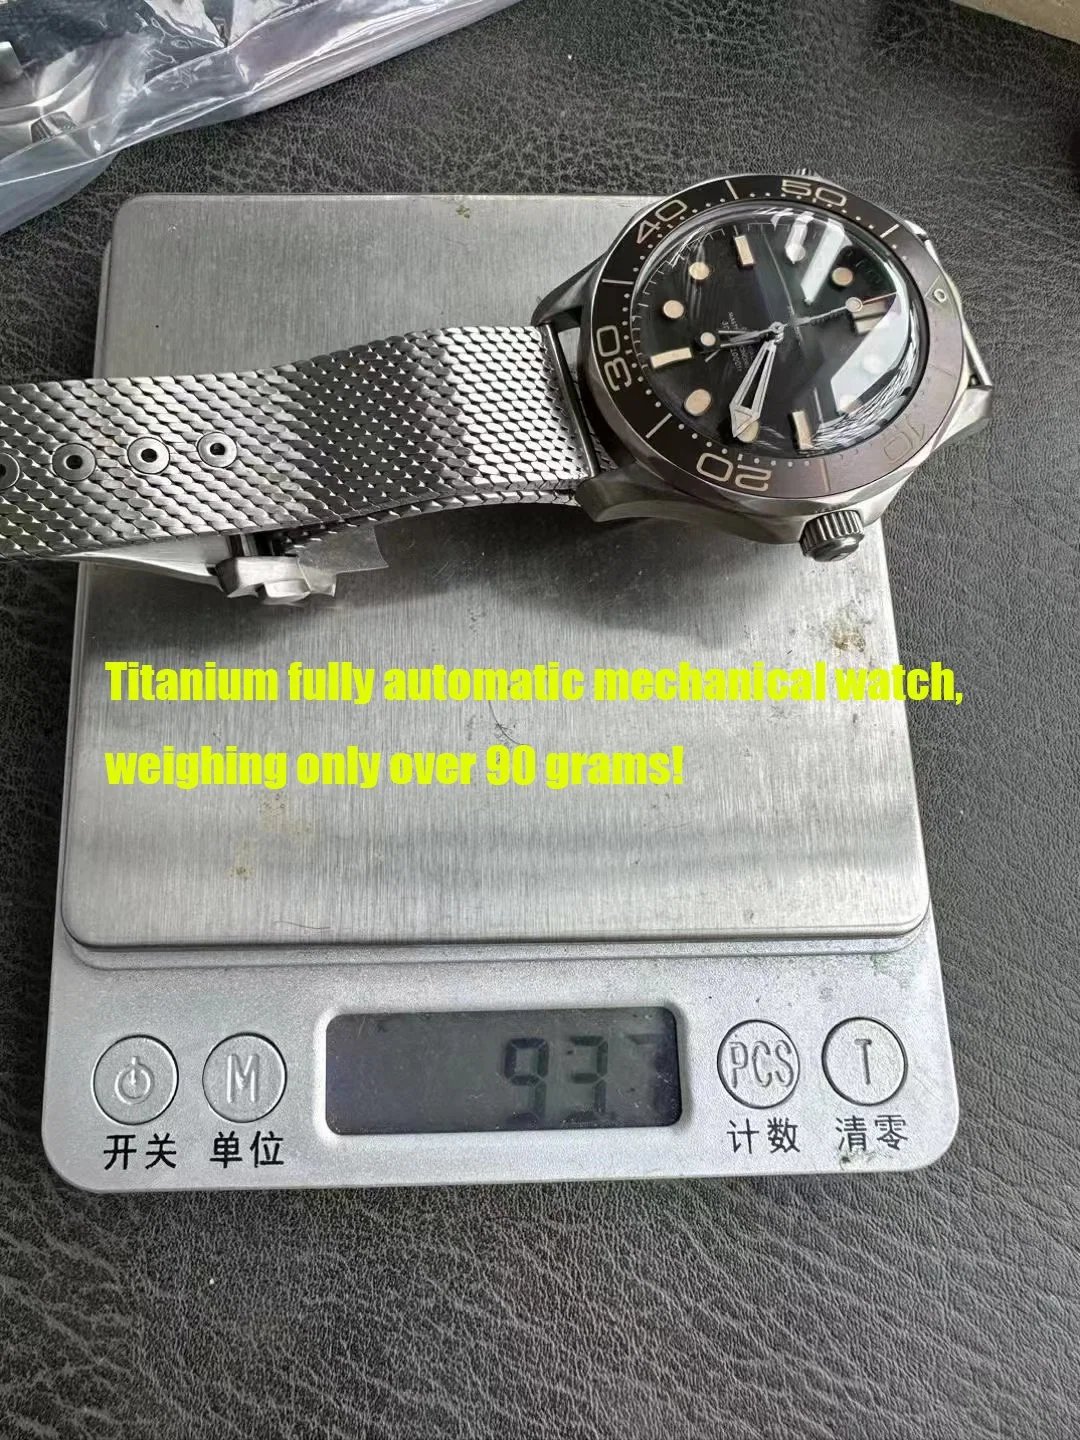 Super Clone Vs Factory 8806 Movement 5A Titanium Watch Luxury Посмотрите Free Nylon Strap and Cloth Bag Packaging Stainless 42 мм Мужские механические часы